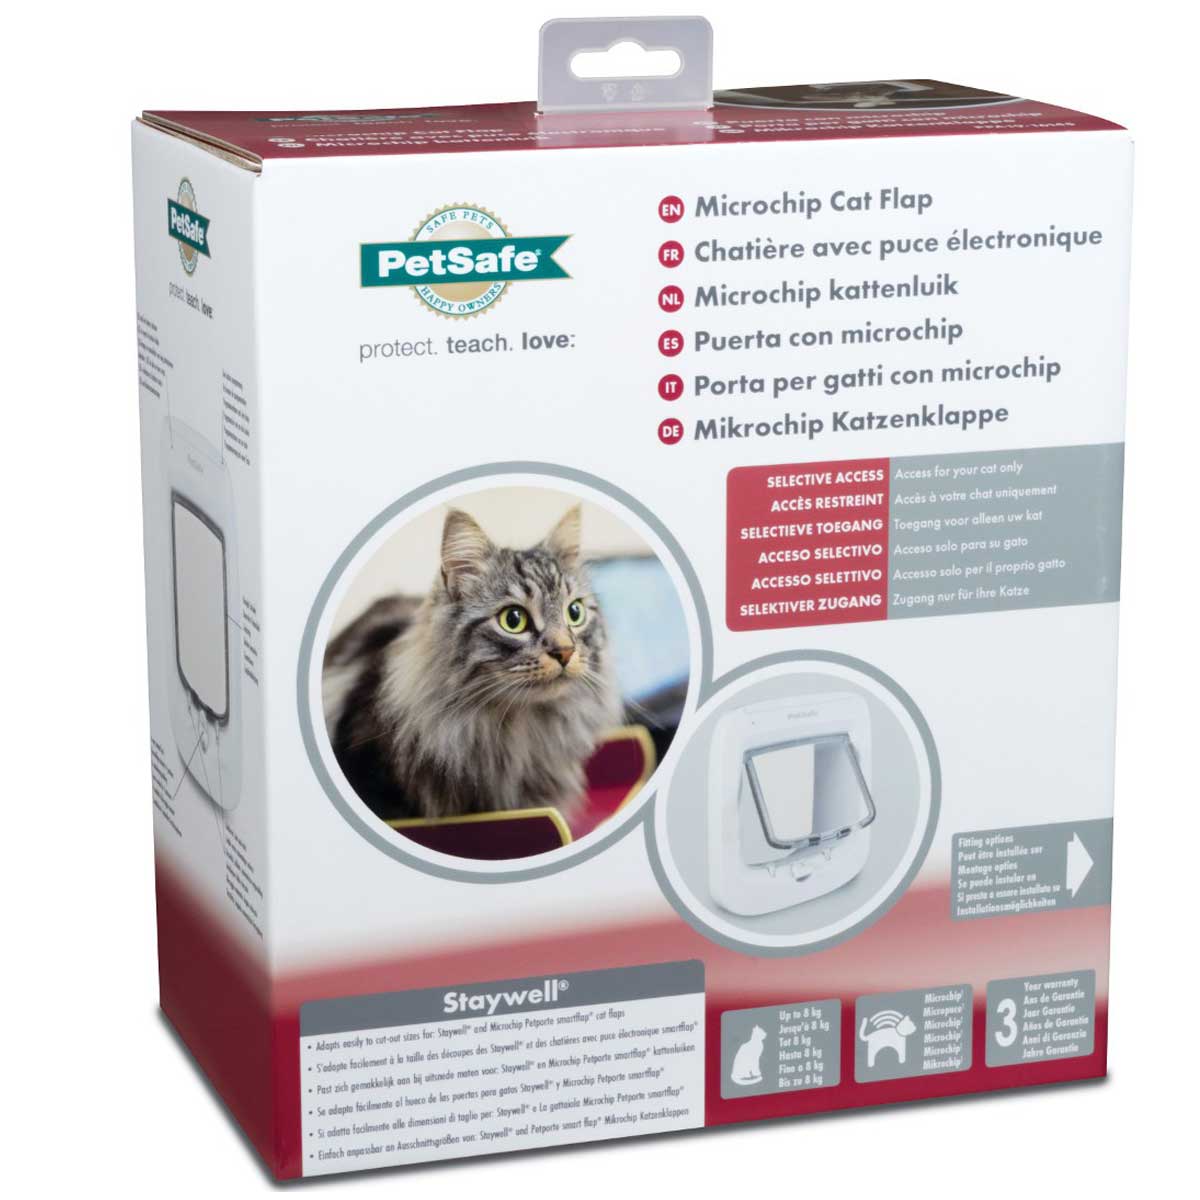 PetSafe Microchip Cat Flap PETPORTE